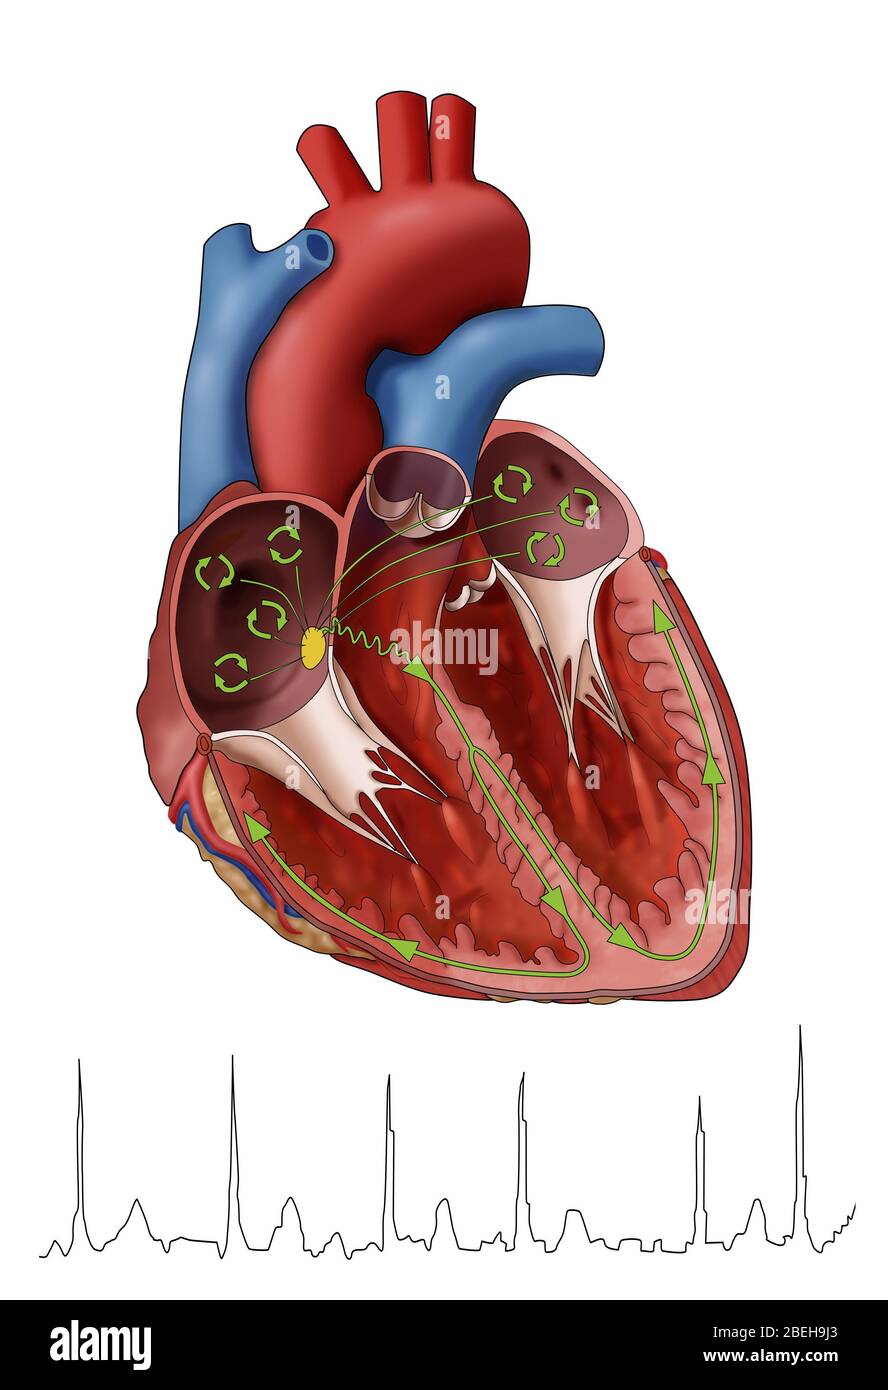 Atrial Fibrillation with EKG, Illustration Stock Photo